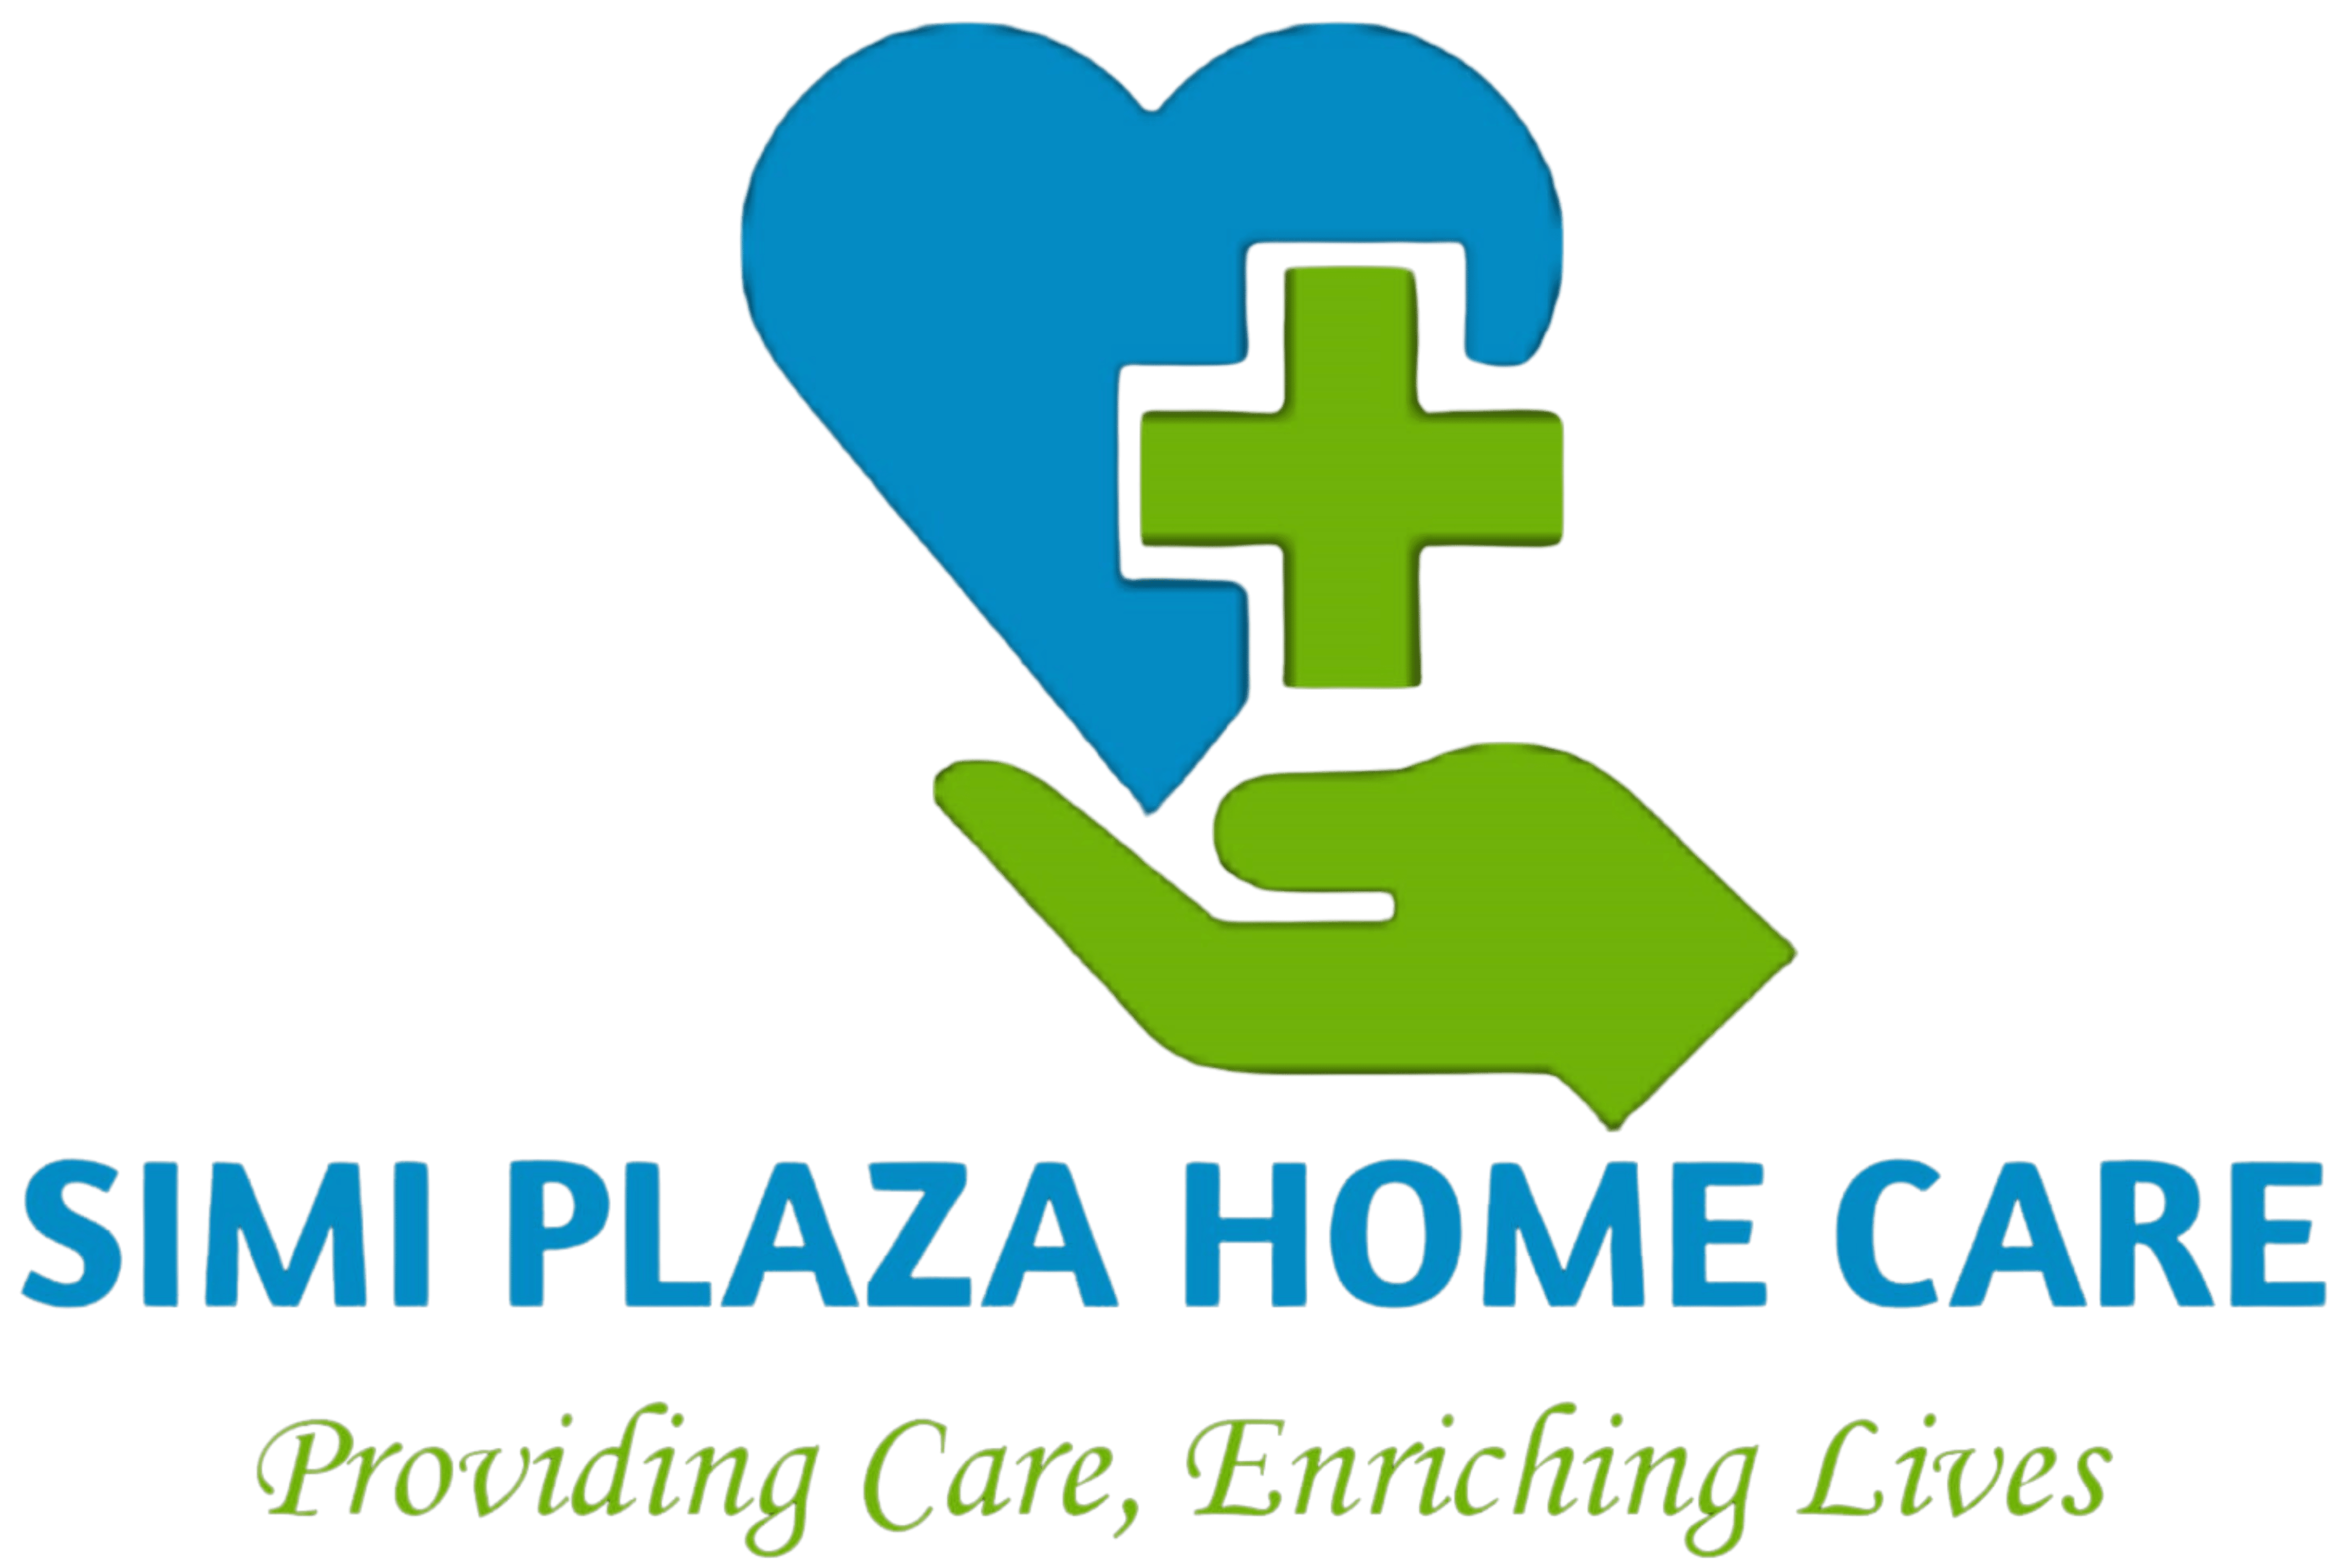 Simi Plaza Home Care